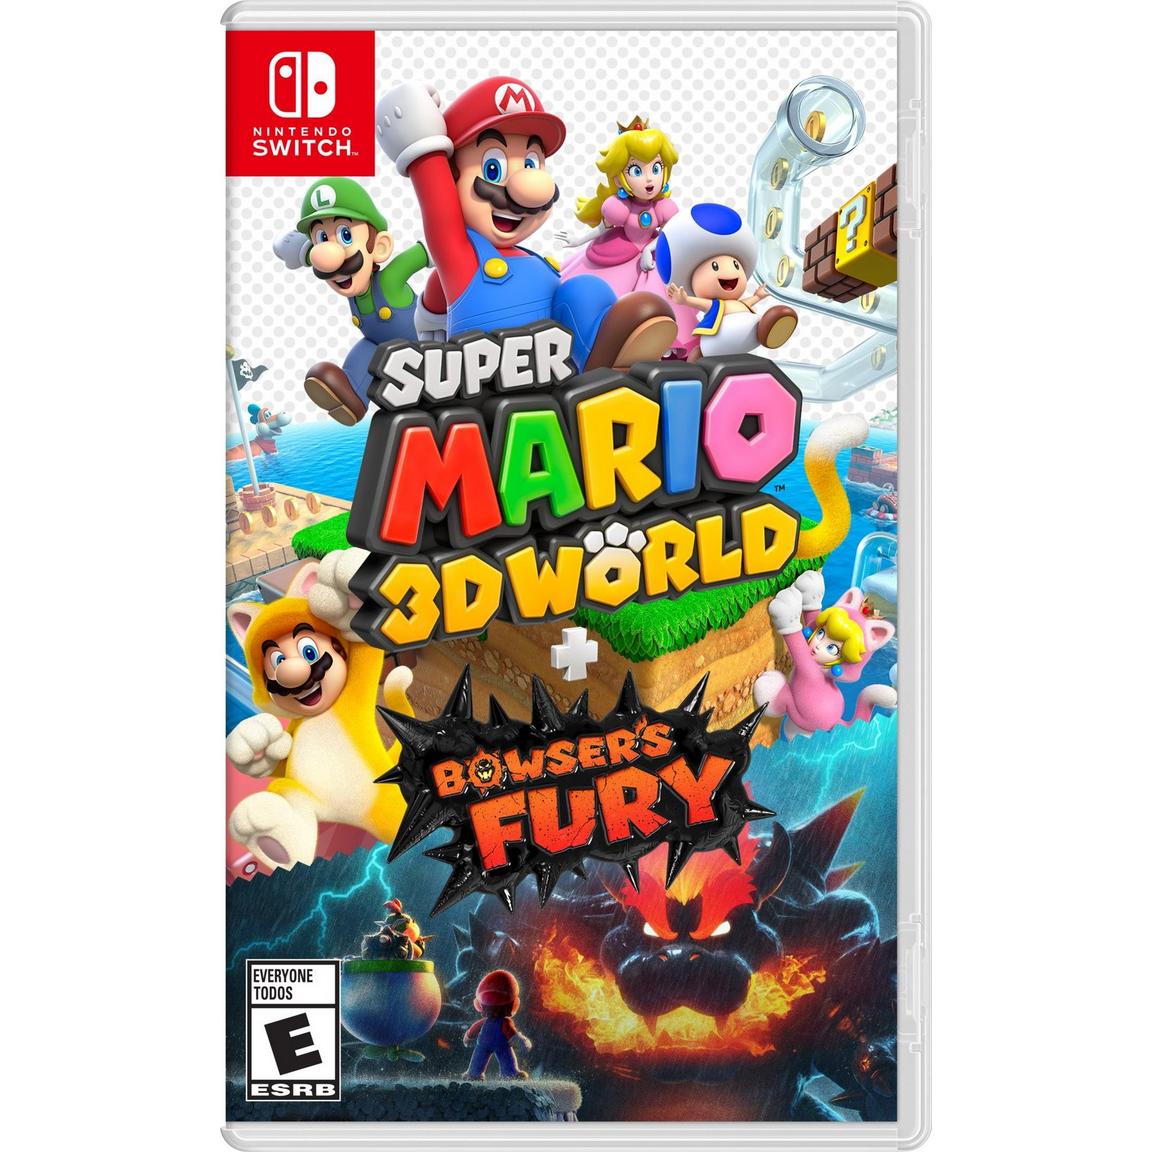 Super Mario 3D World Plus Bower's Fury